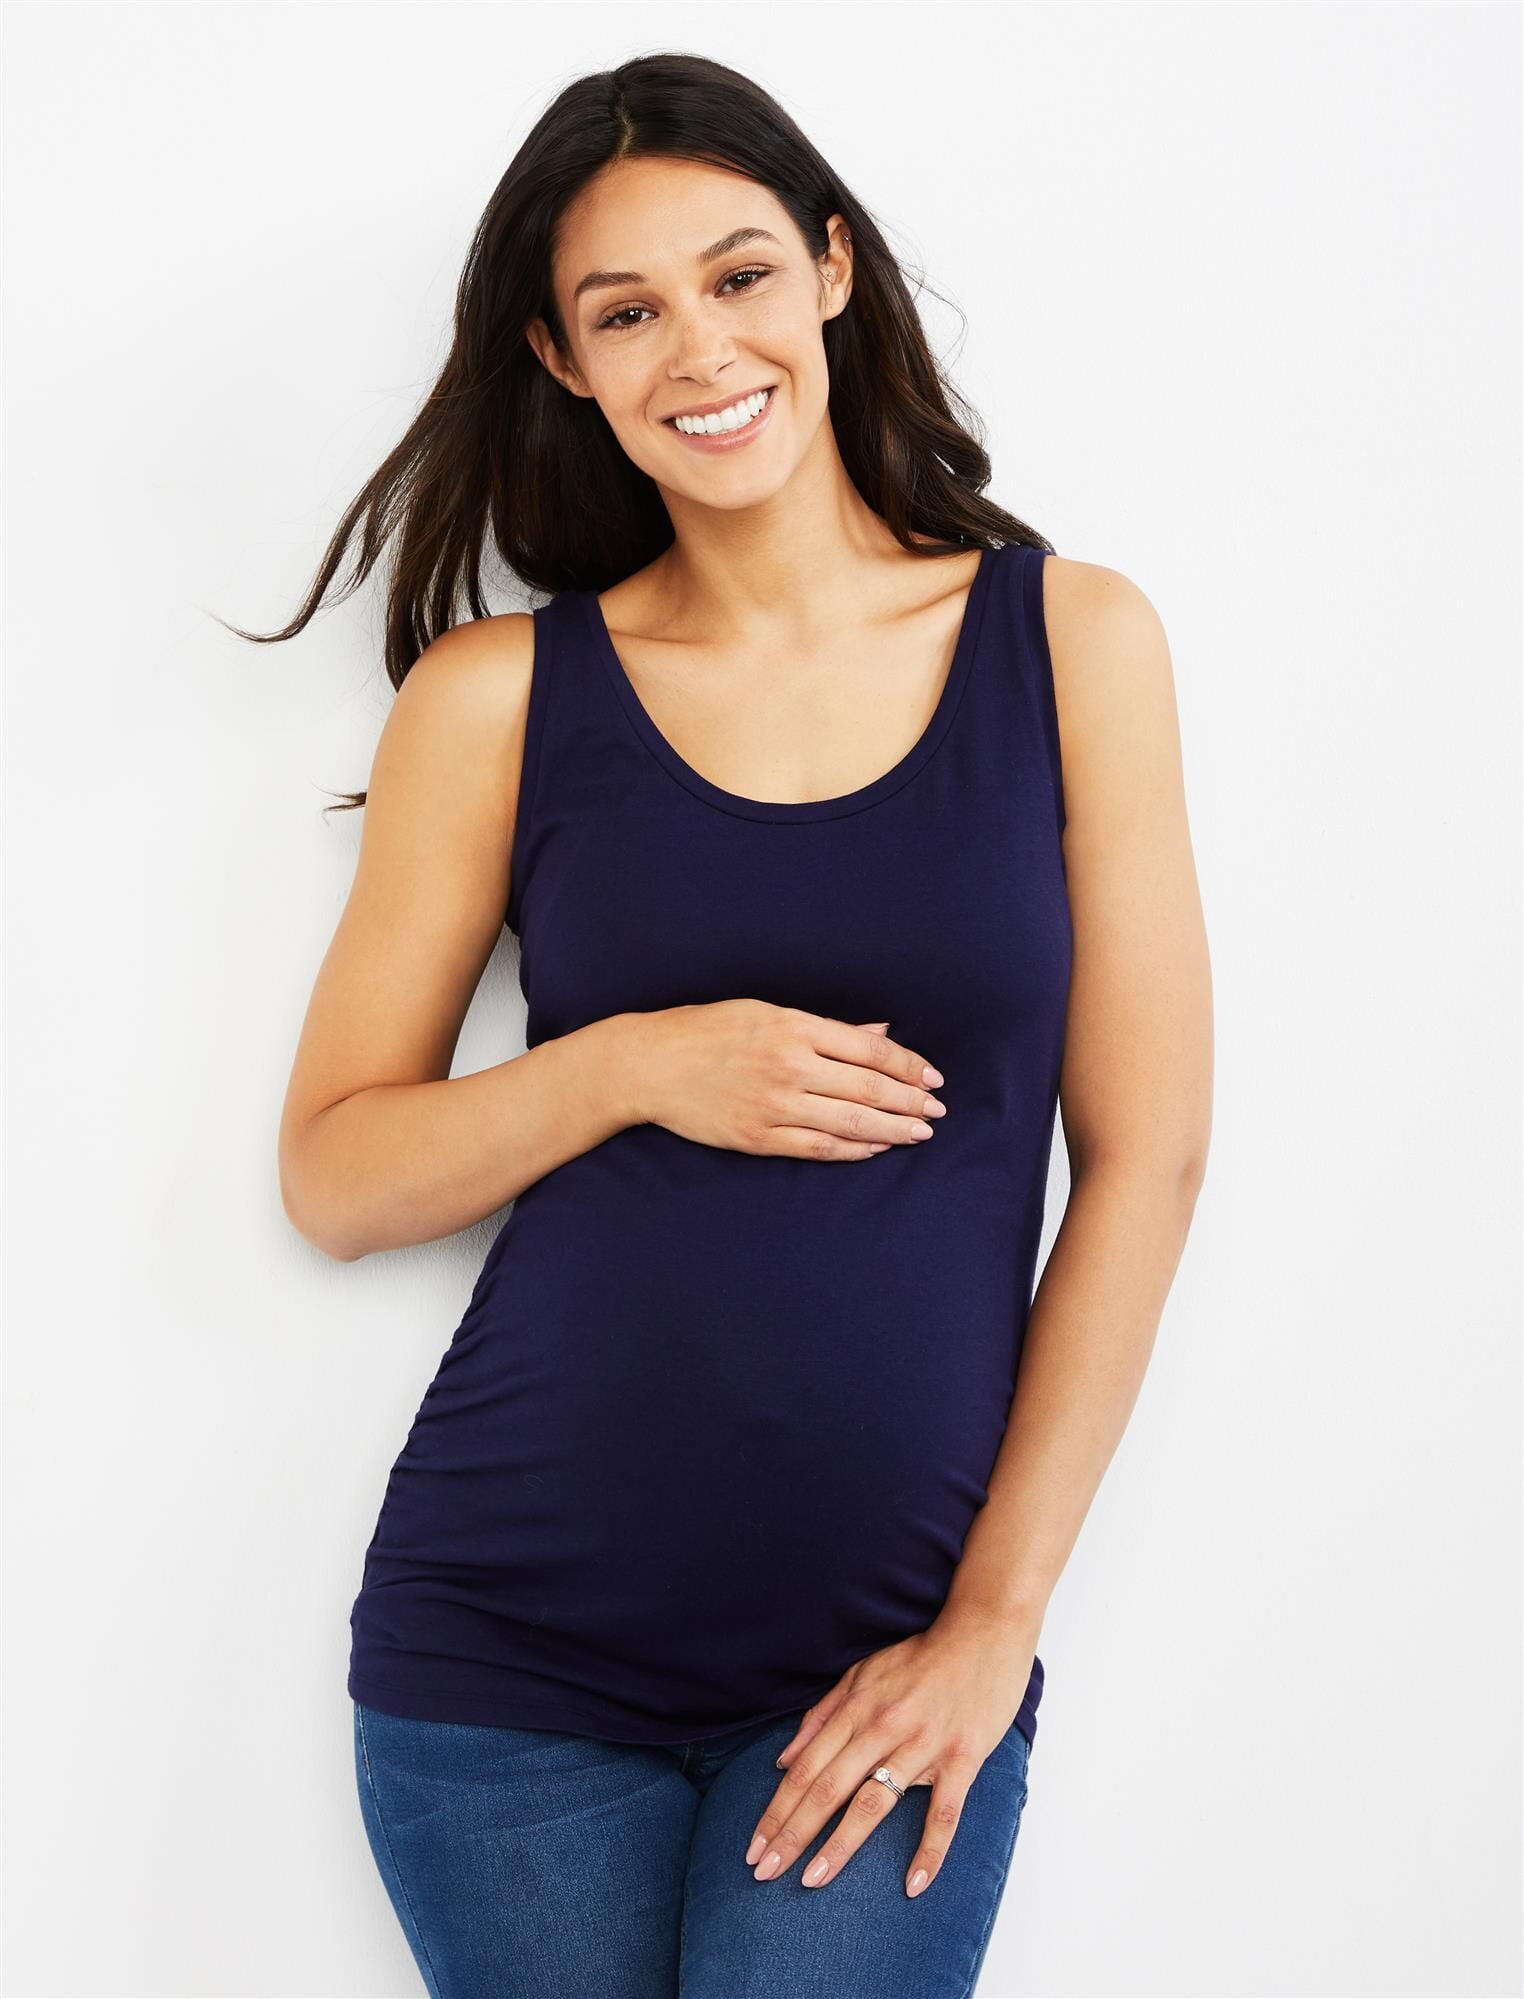 Motherhood Maternity Womens Seamless Side Ruched Tank Top Cami Shirt